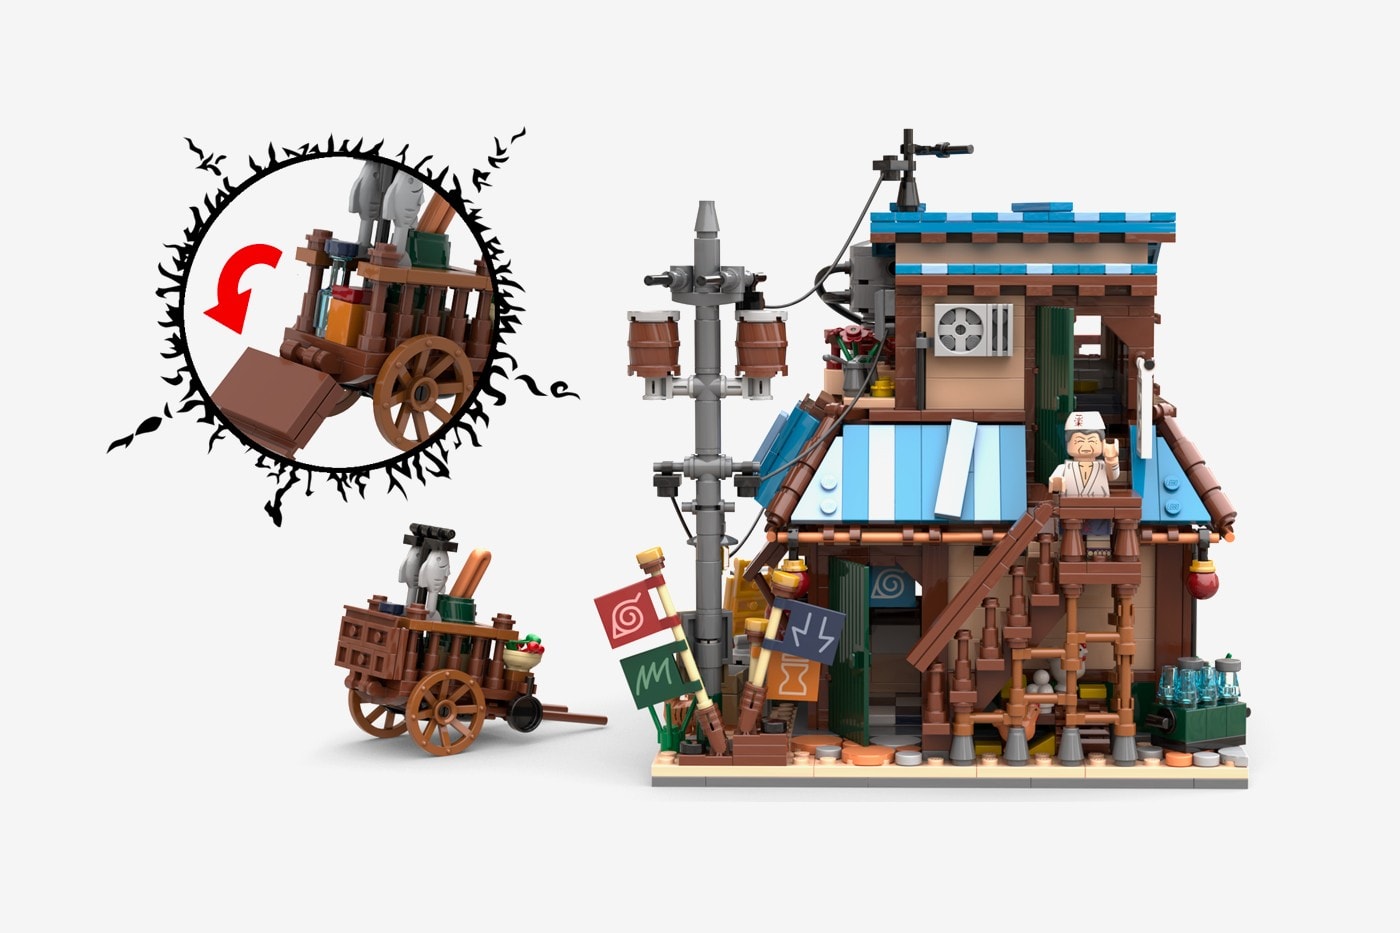 LEGO IDEAS 實體化《Naruto》經典場景「一楽拉麵」